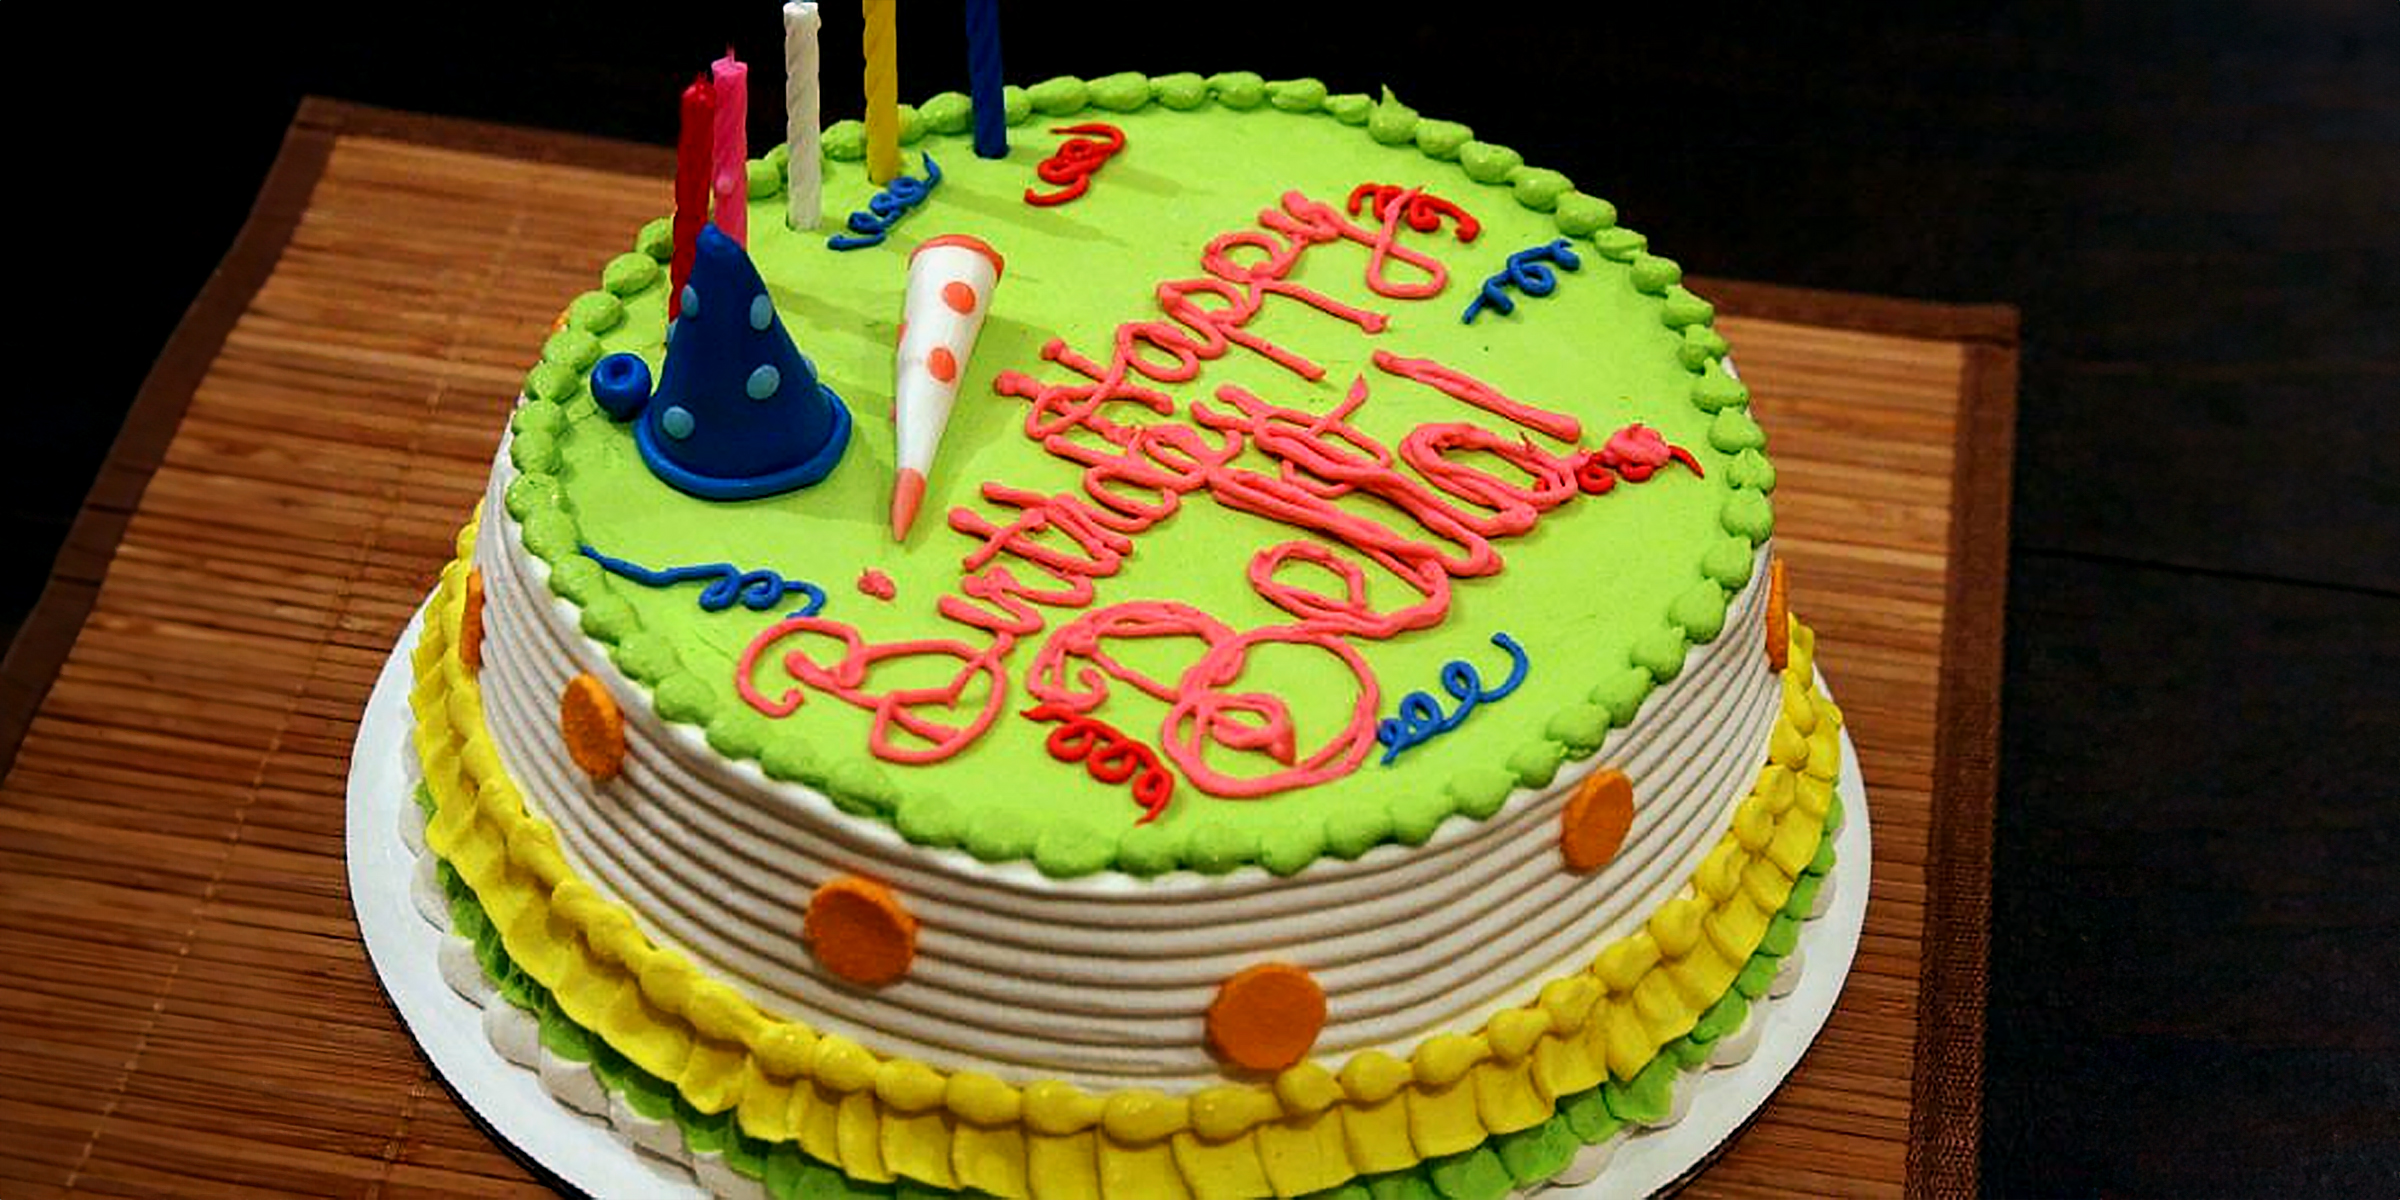 Birthday cake | Source: Flickr